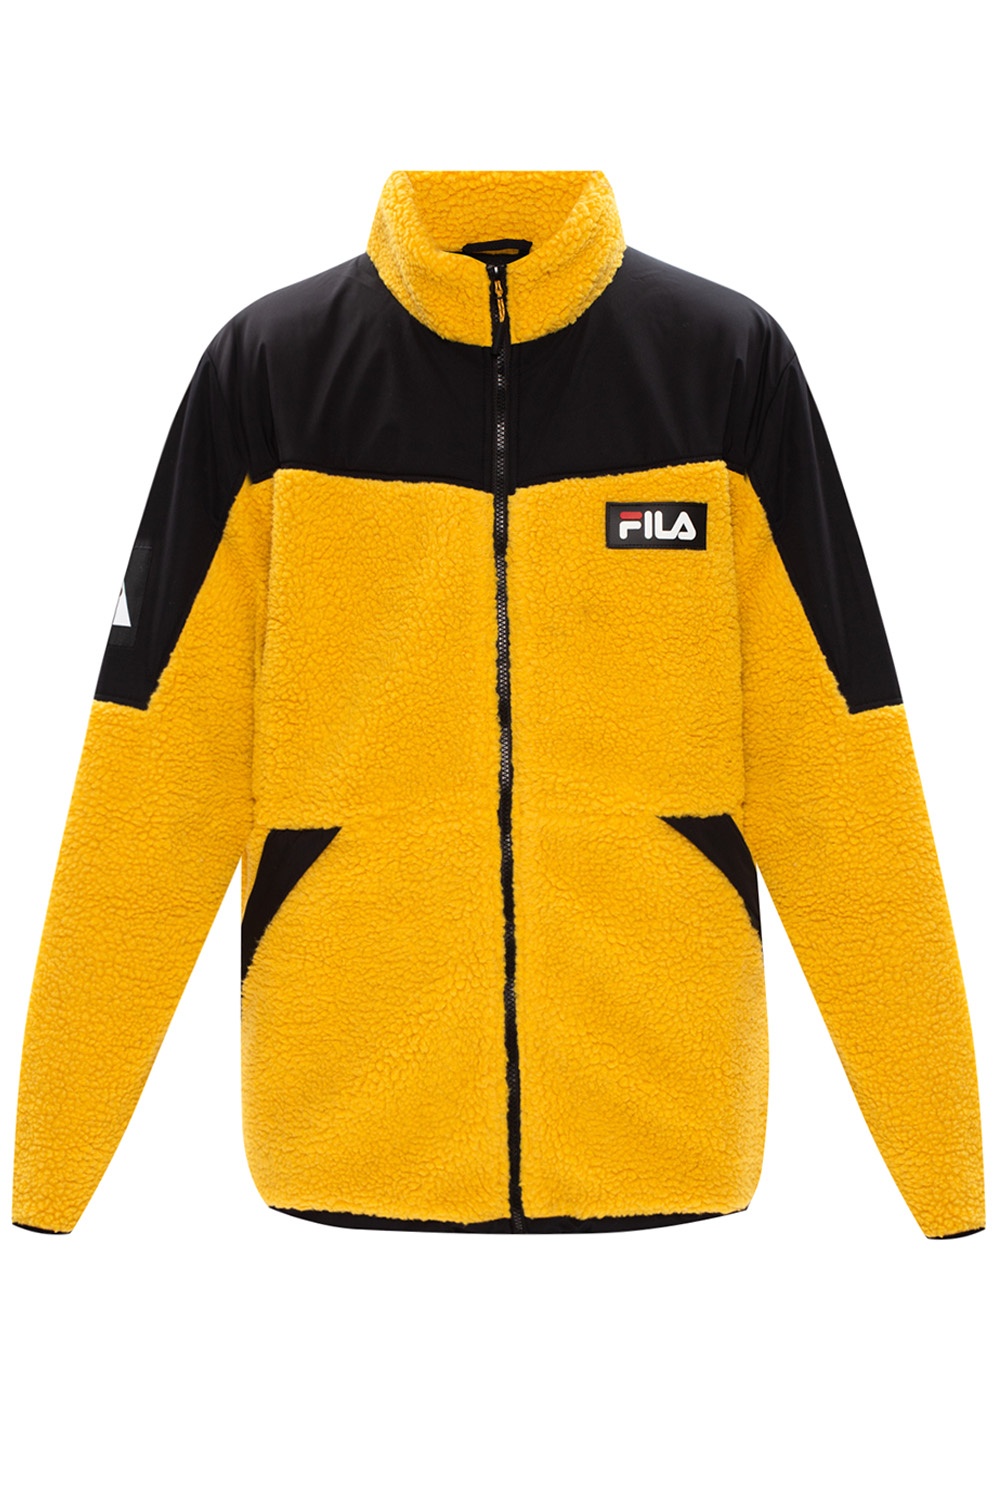 fila yellow jacket